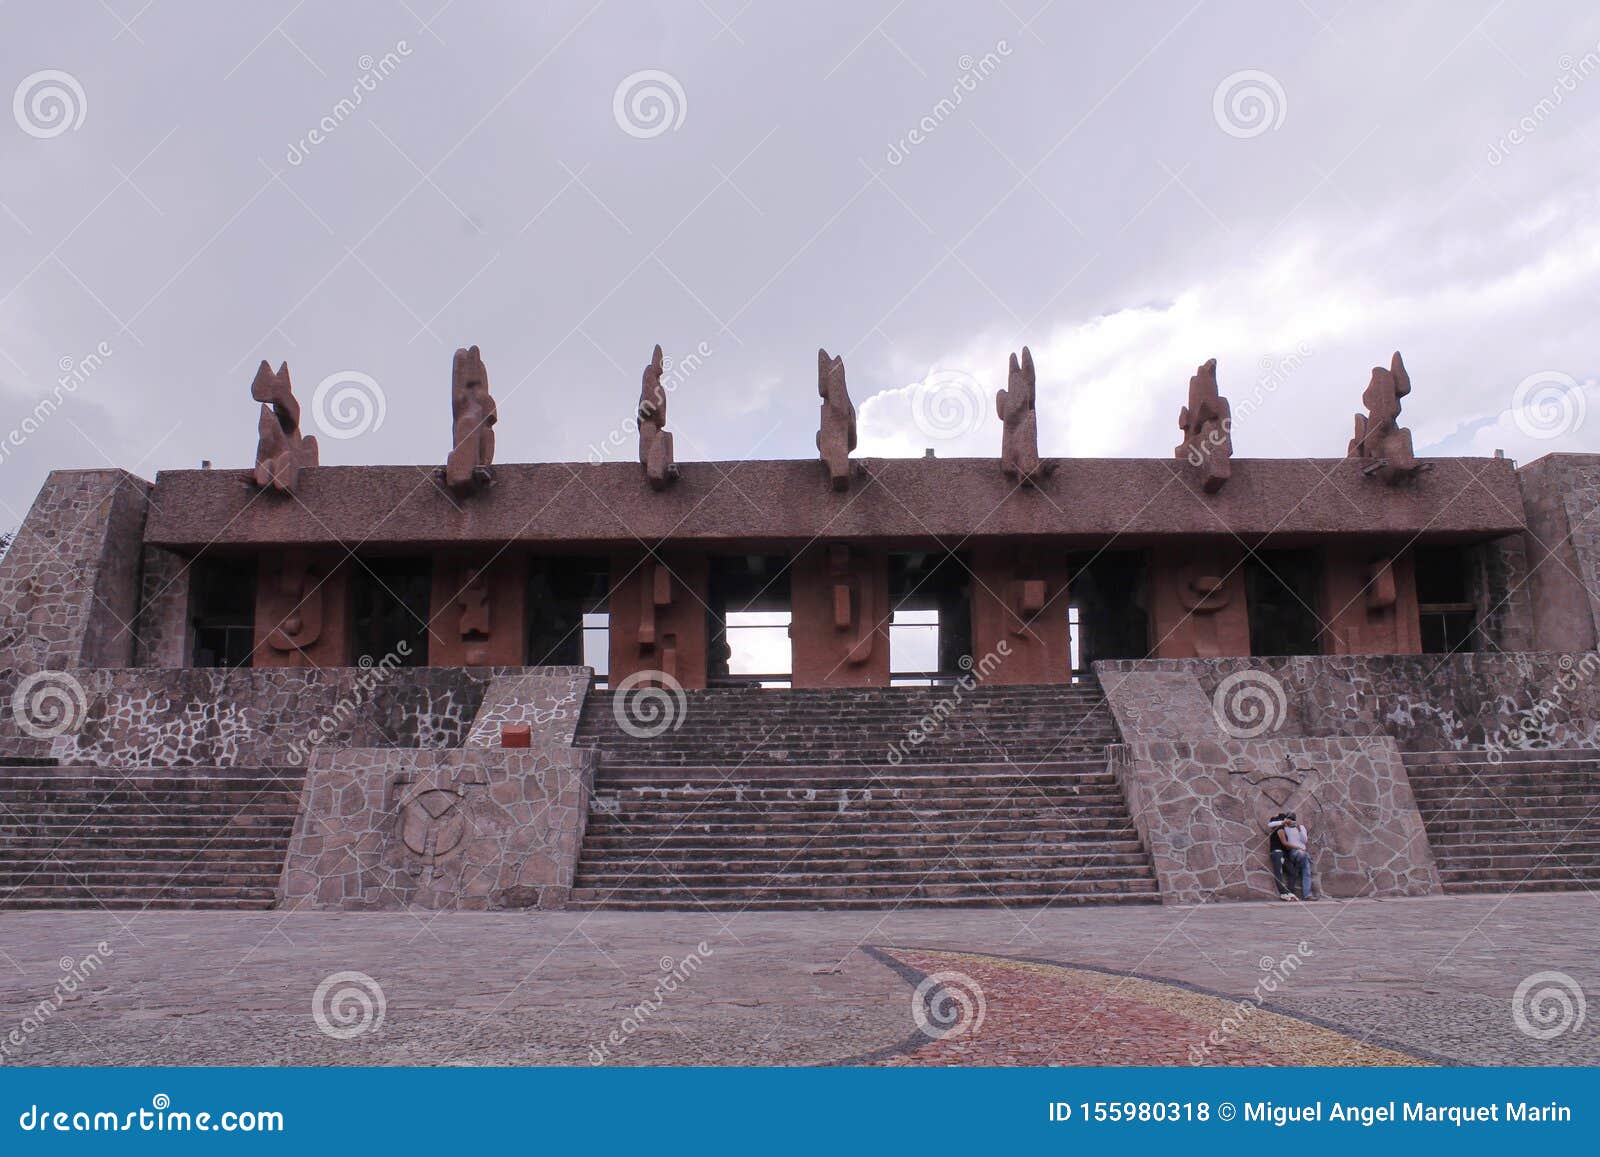 building in the square of centro ceremonial otomi in estado de mexico